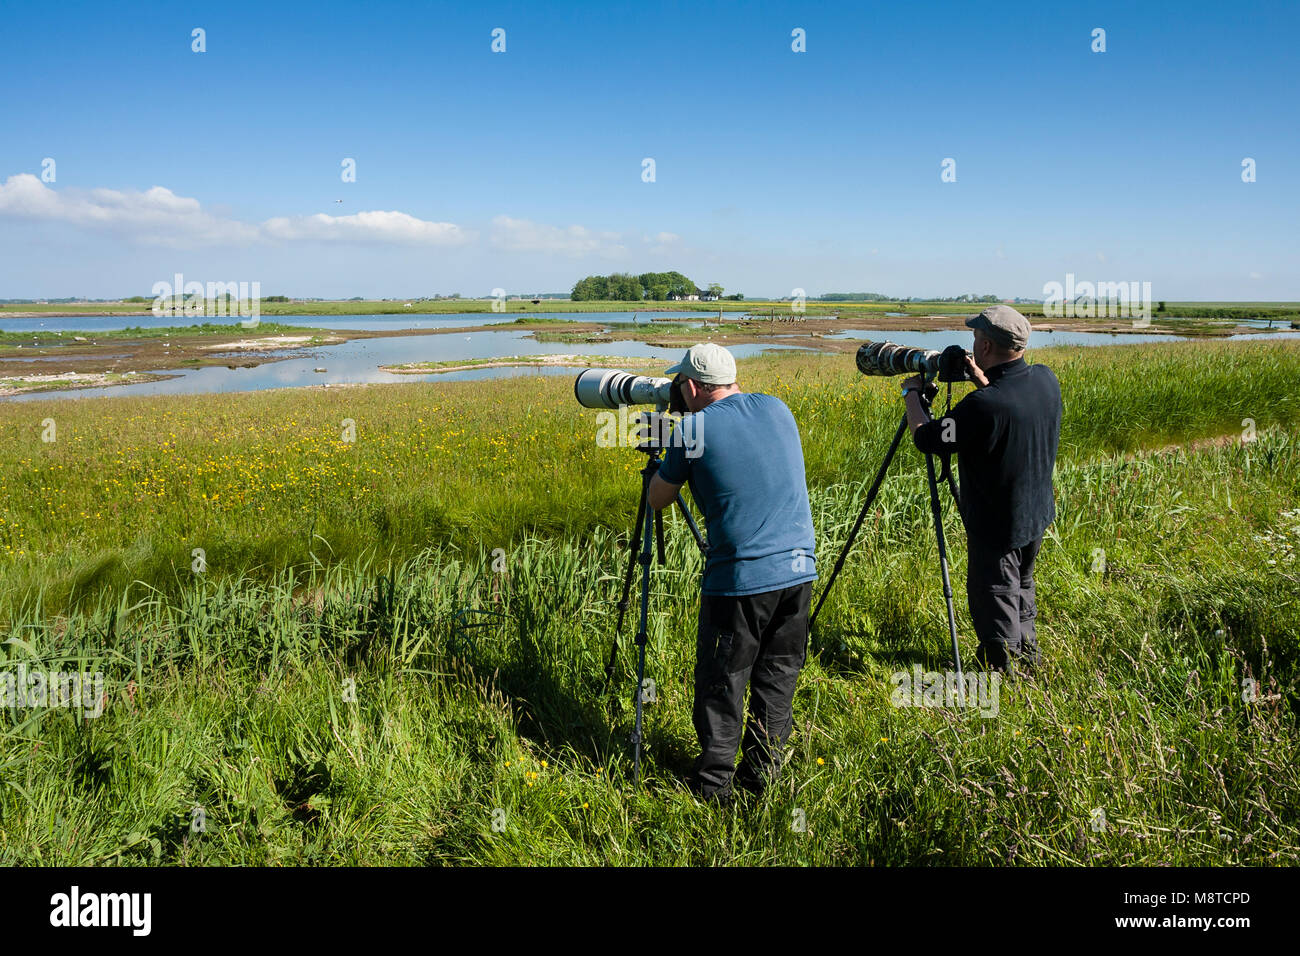 Vogelfotografen in actie bij waterplas met Vogels Vogel Fotografen in Aktion am See mit Vögeln Stockfoto